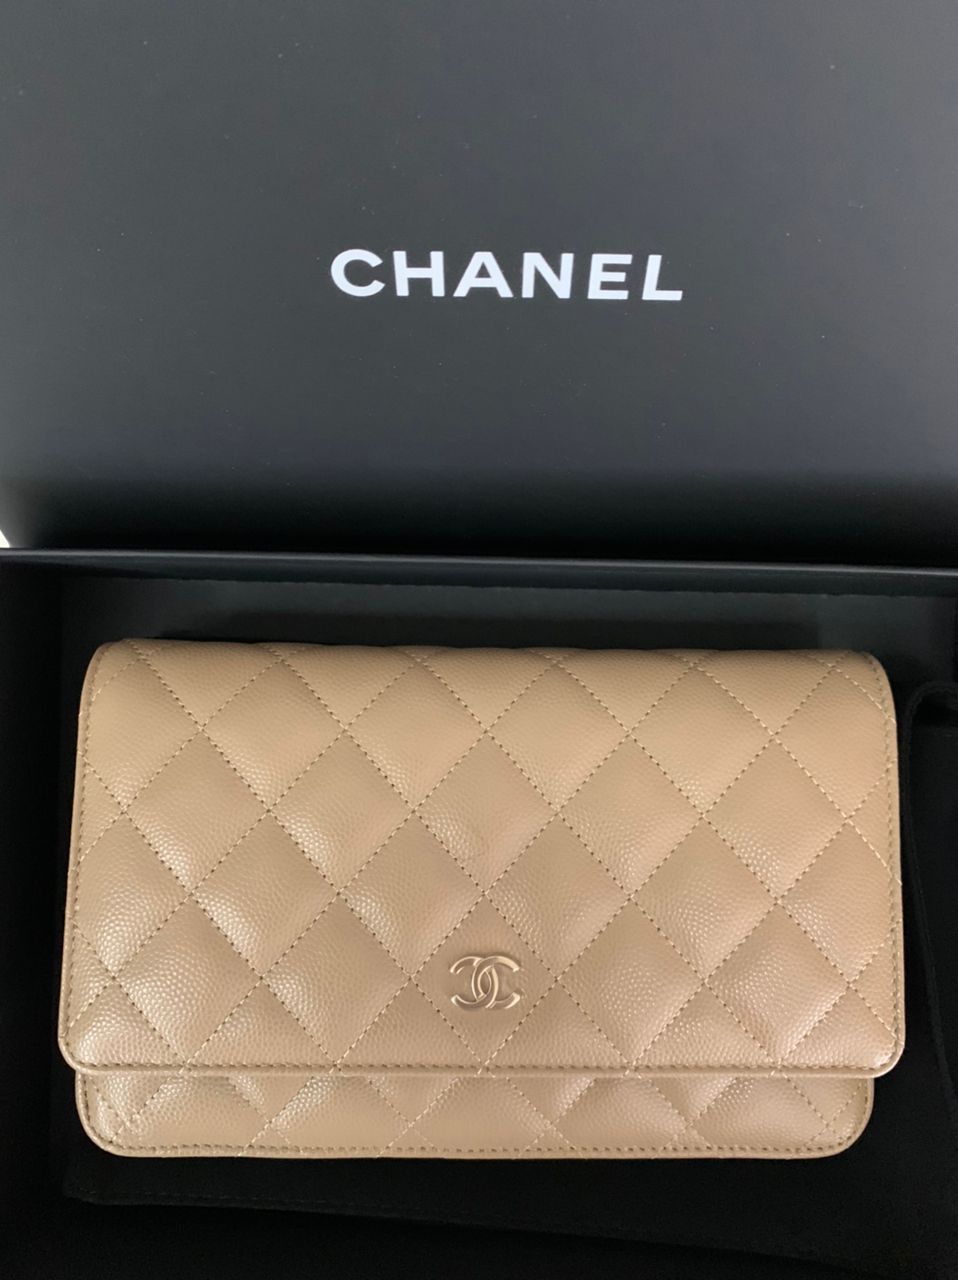 CHANEL 22K Dark Beige Wallet on Chain WoC Mini Bag Features